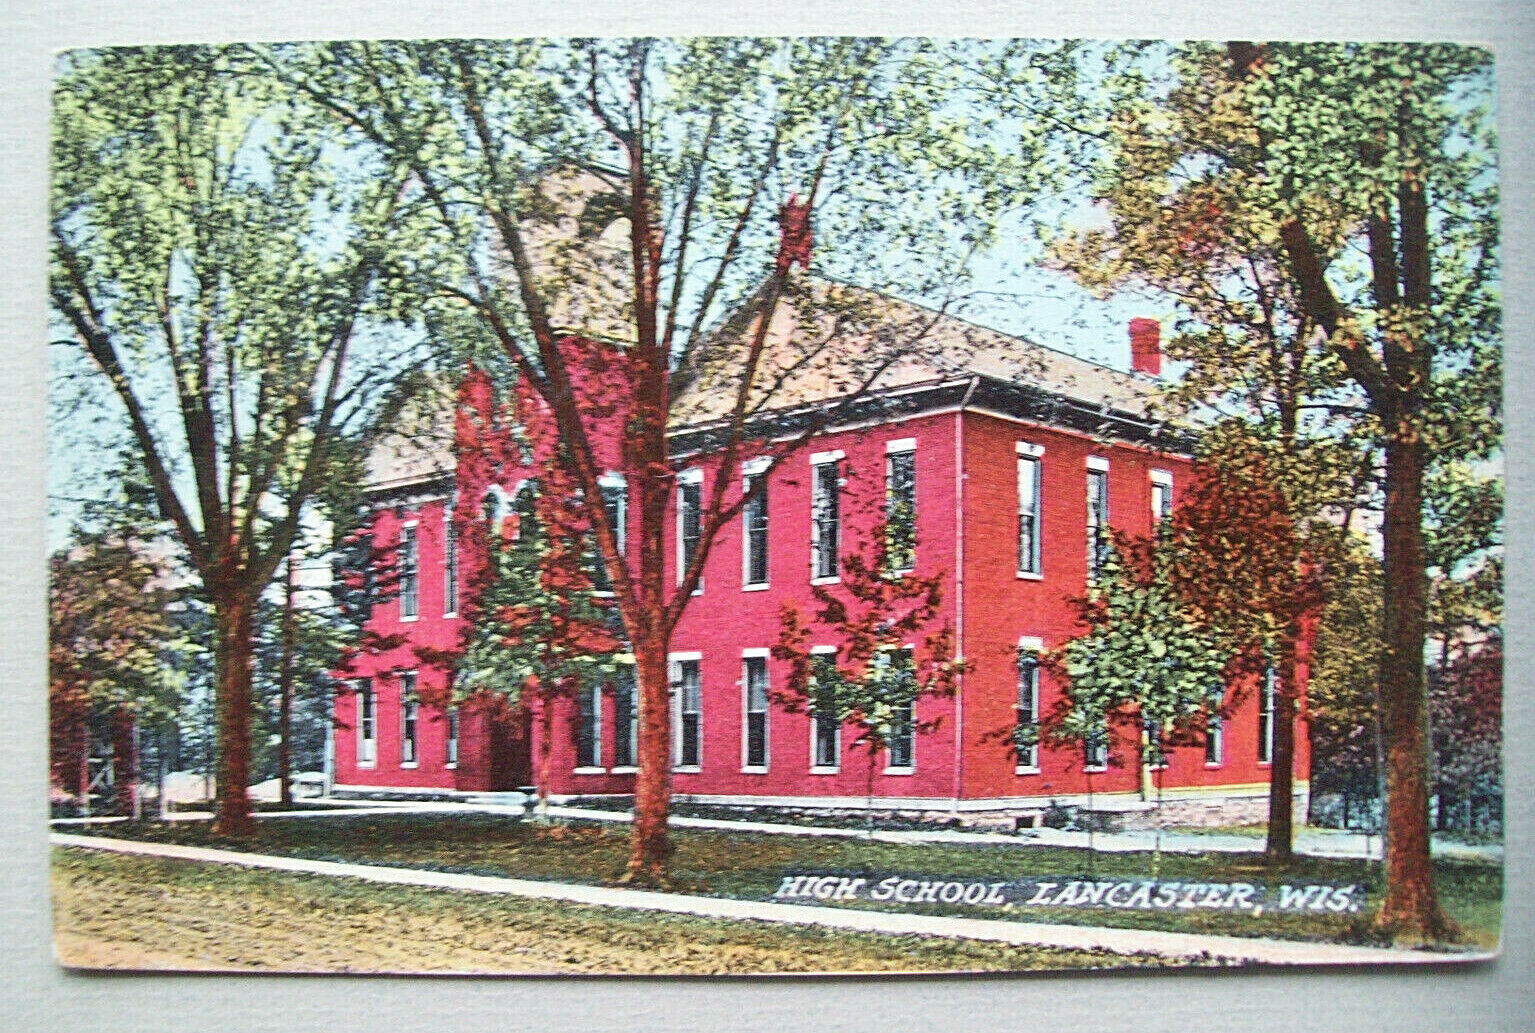 High School Lancaster, WI Wisconsin postcard